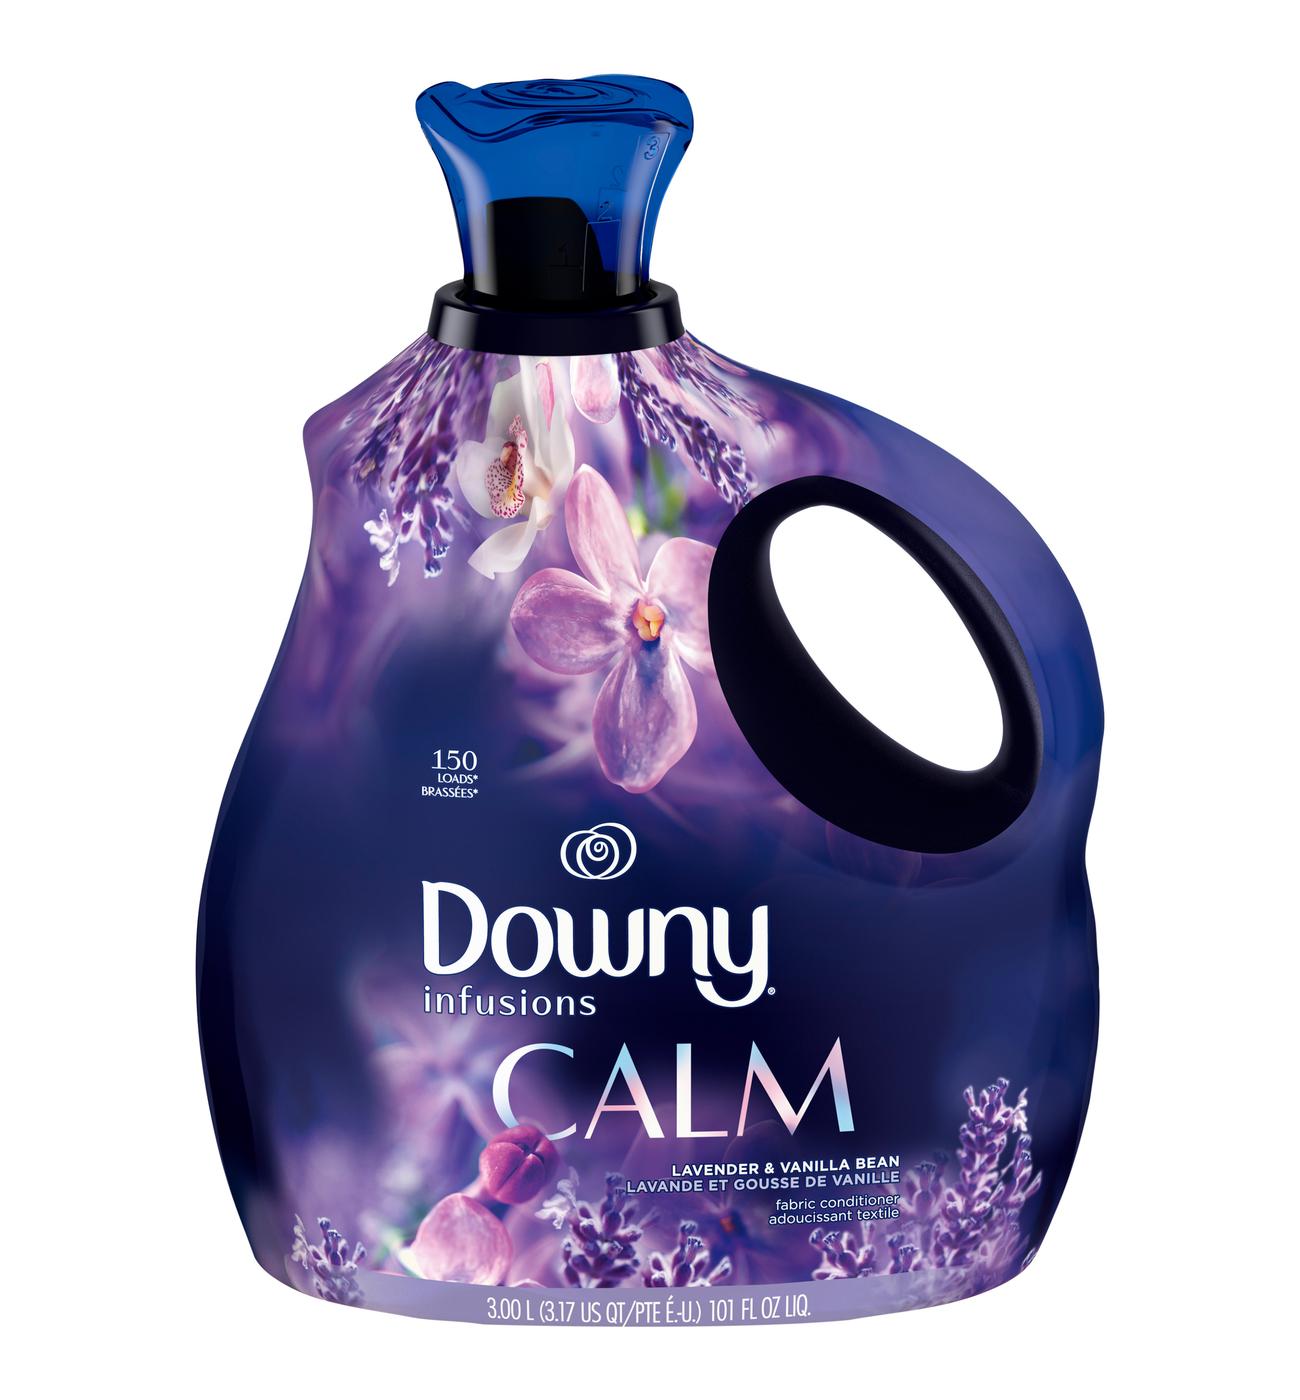 Downy Infusions Calm Liquid Fabric Conditioner, 150 Loads - Lavender & Vanilla; image 1 of 6